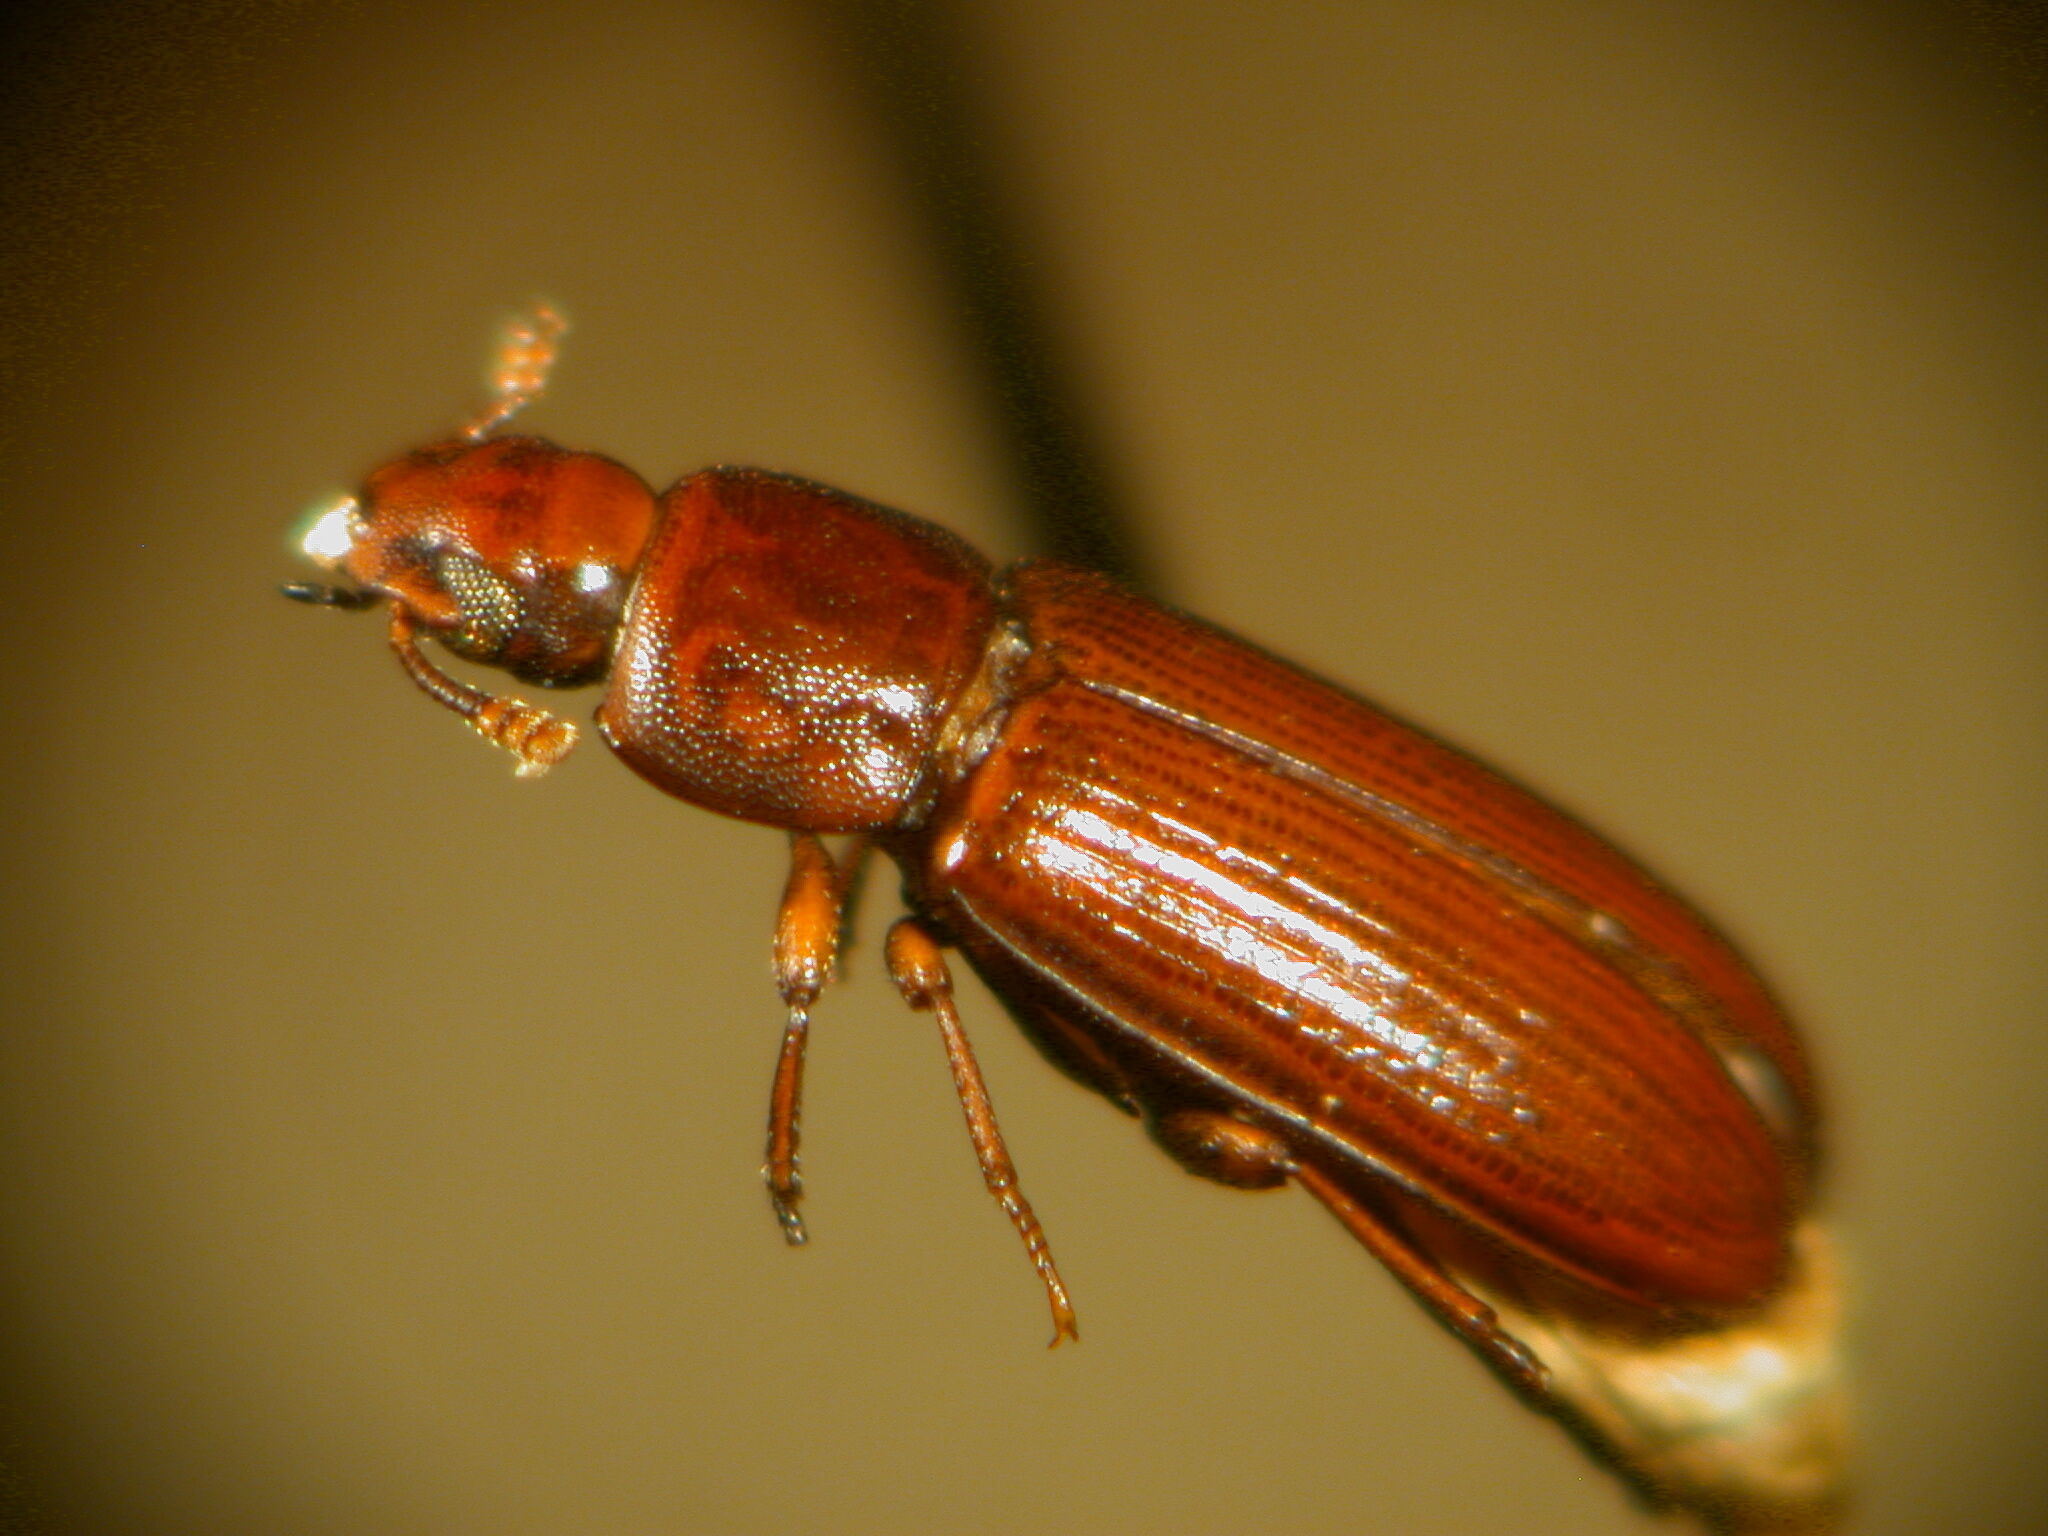 https://atyfbykqjo.cloudimg.io/v7/www.davespestcontrol.com/wp-content/uploads/2023/01/Pantry-beetle.jpg